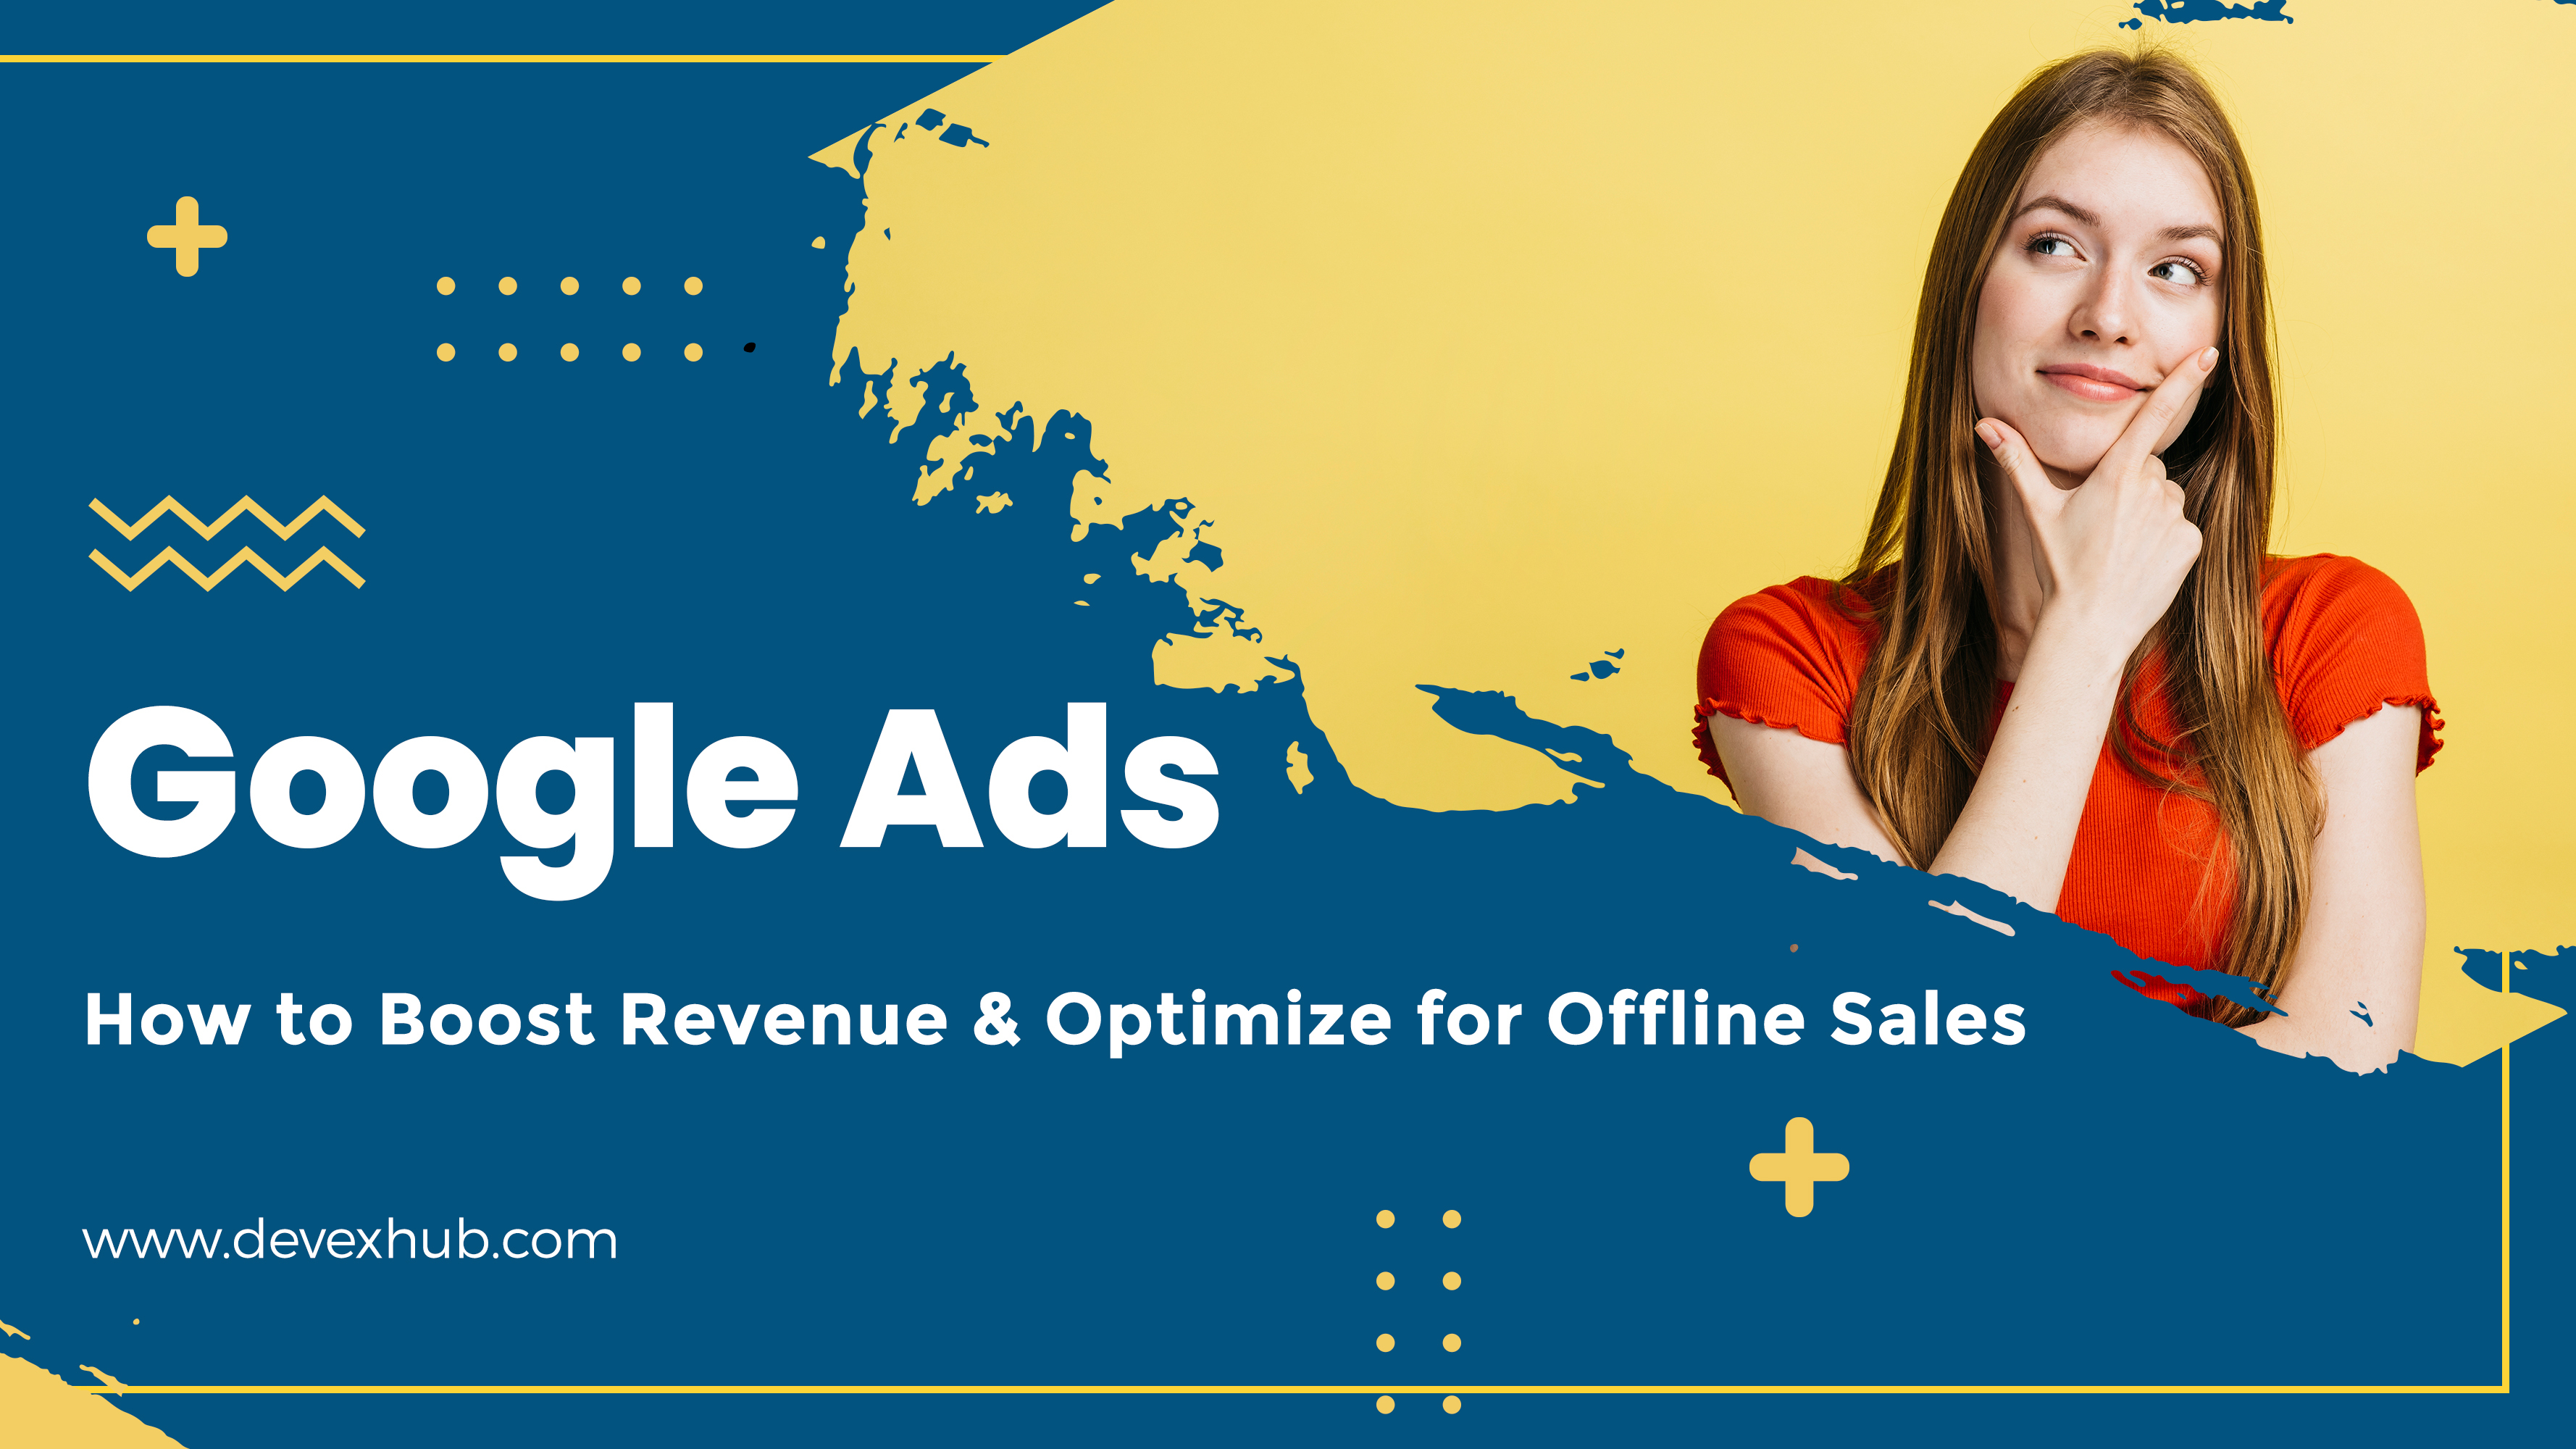 Google Ads: How to Boost Revenue & Optimize for Offline Sales